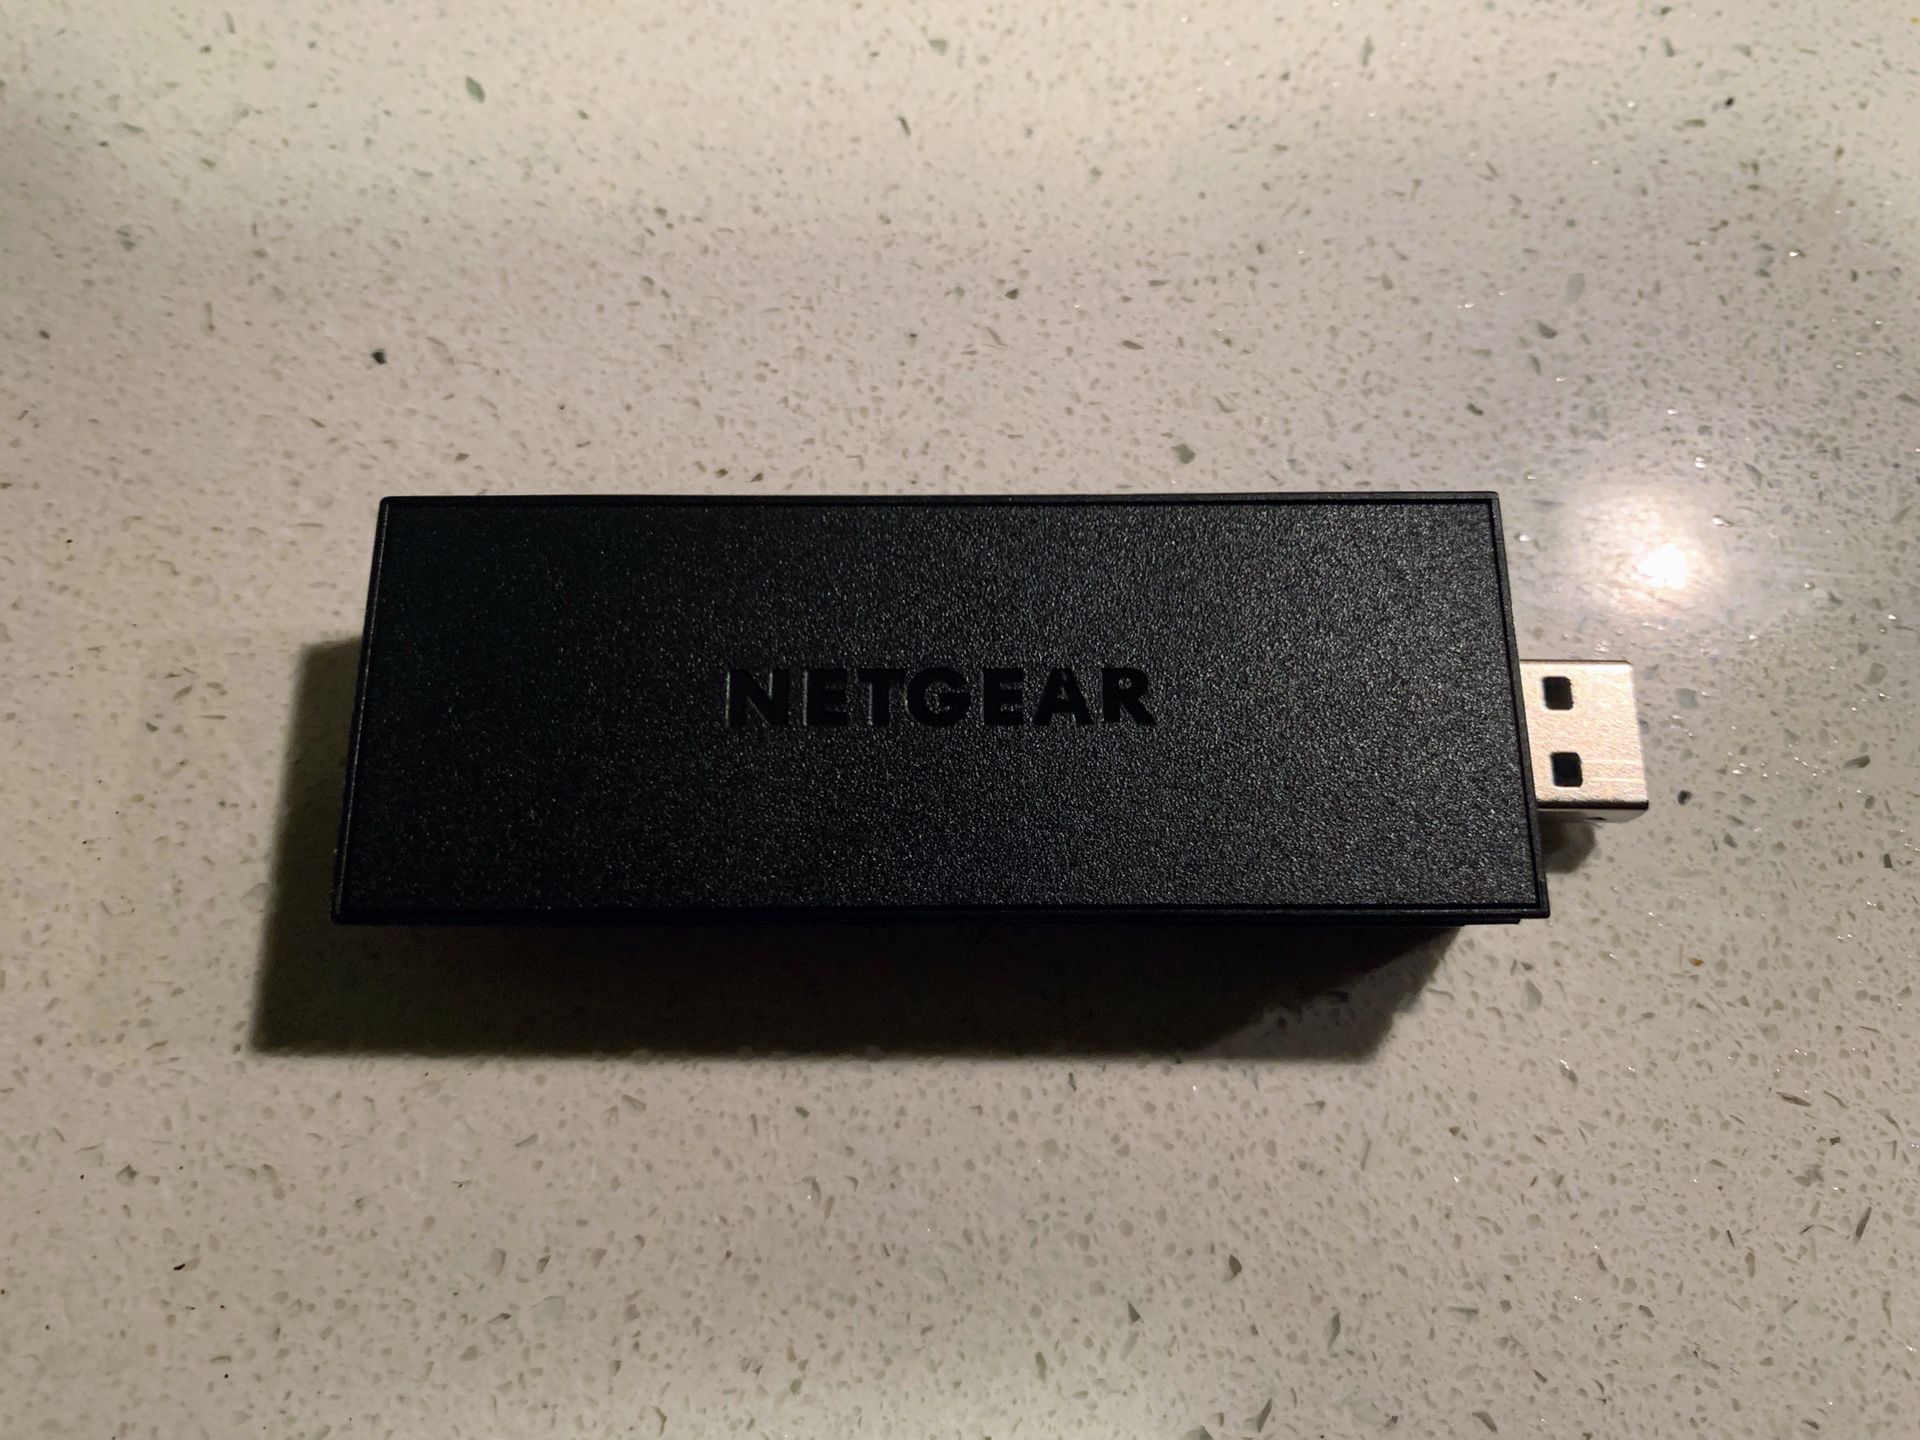 Netgear USB 3.0 wireless adapter